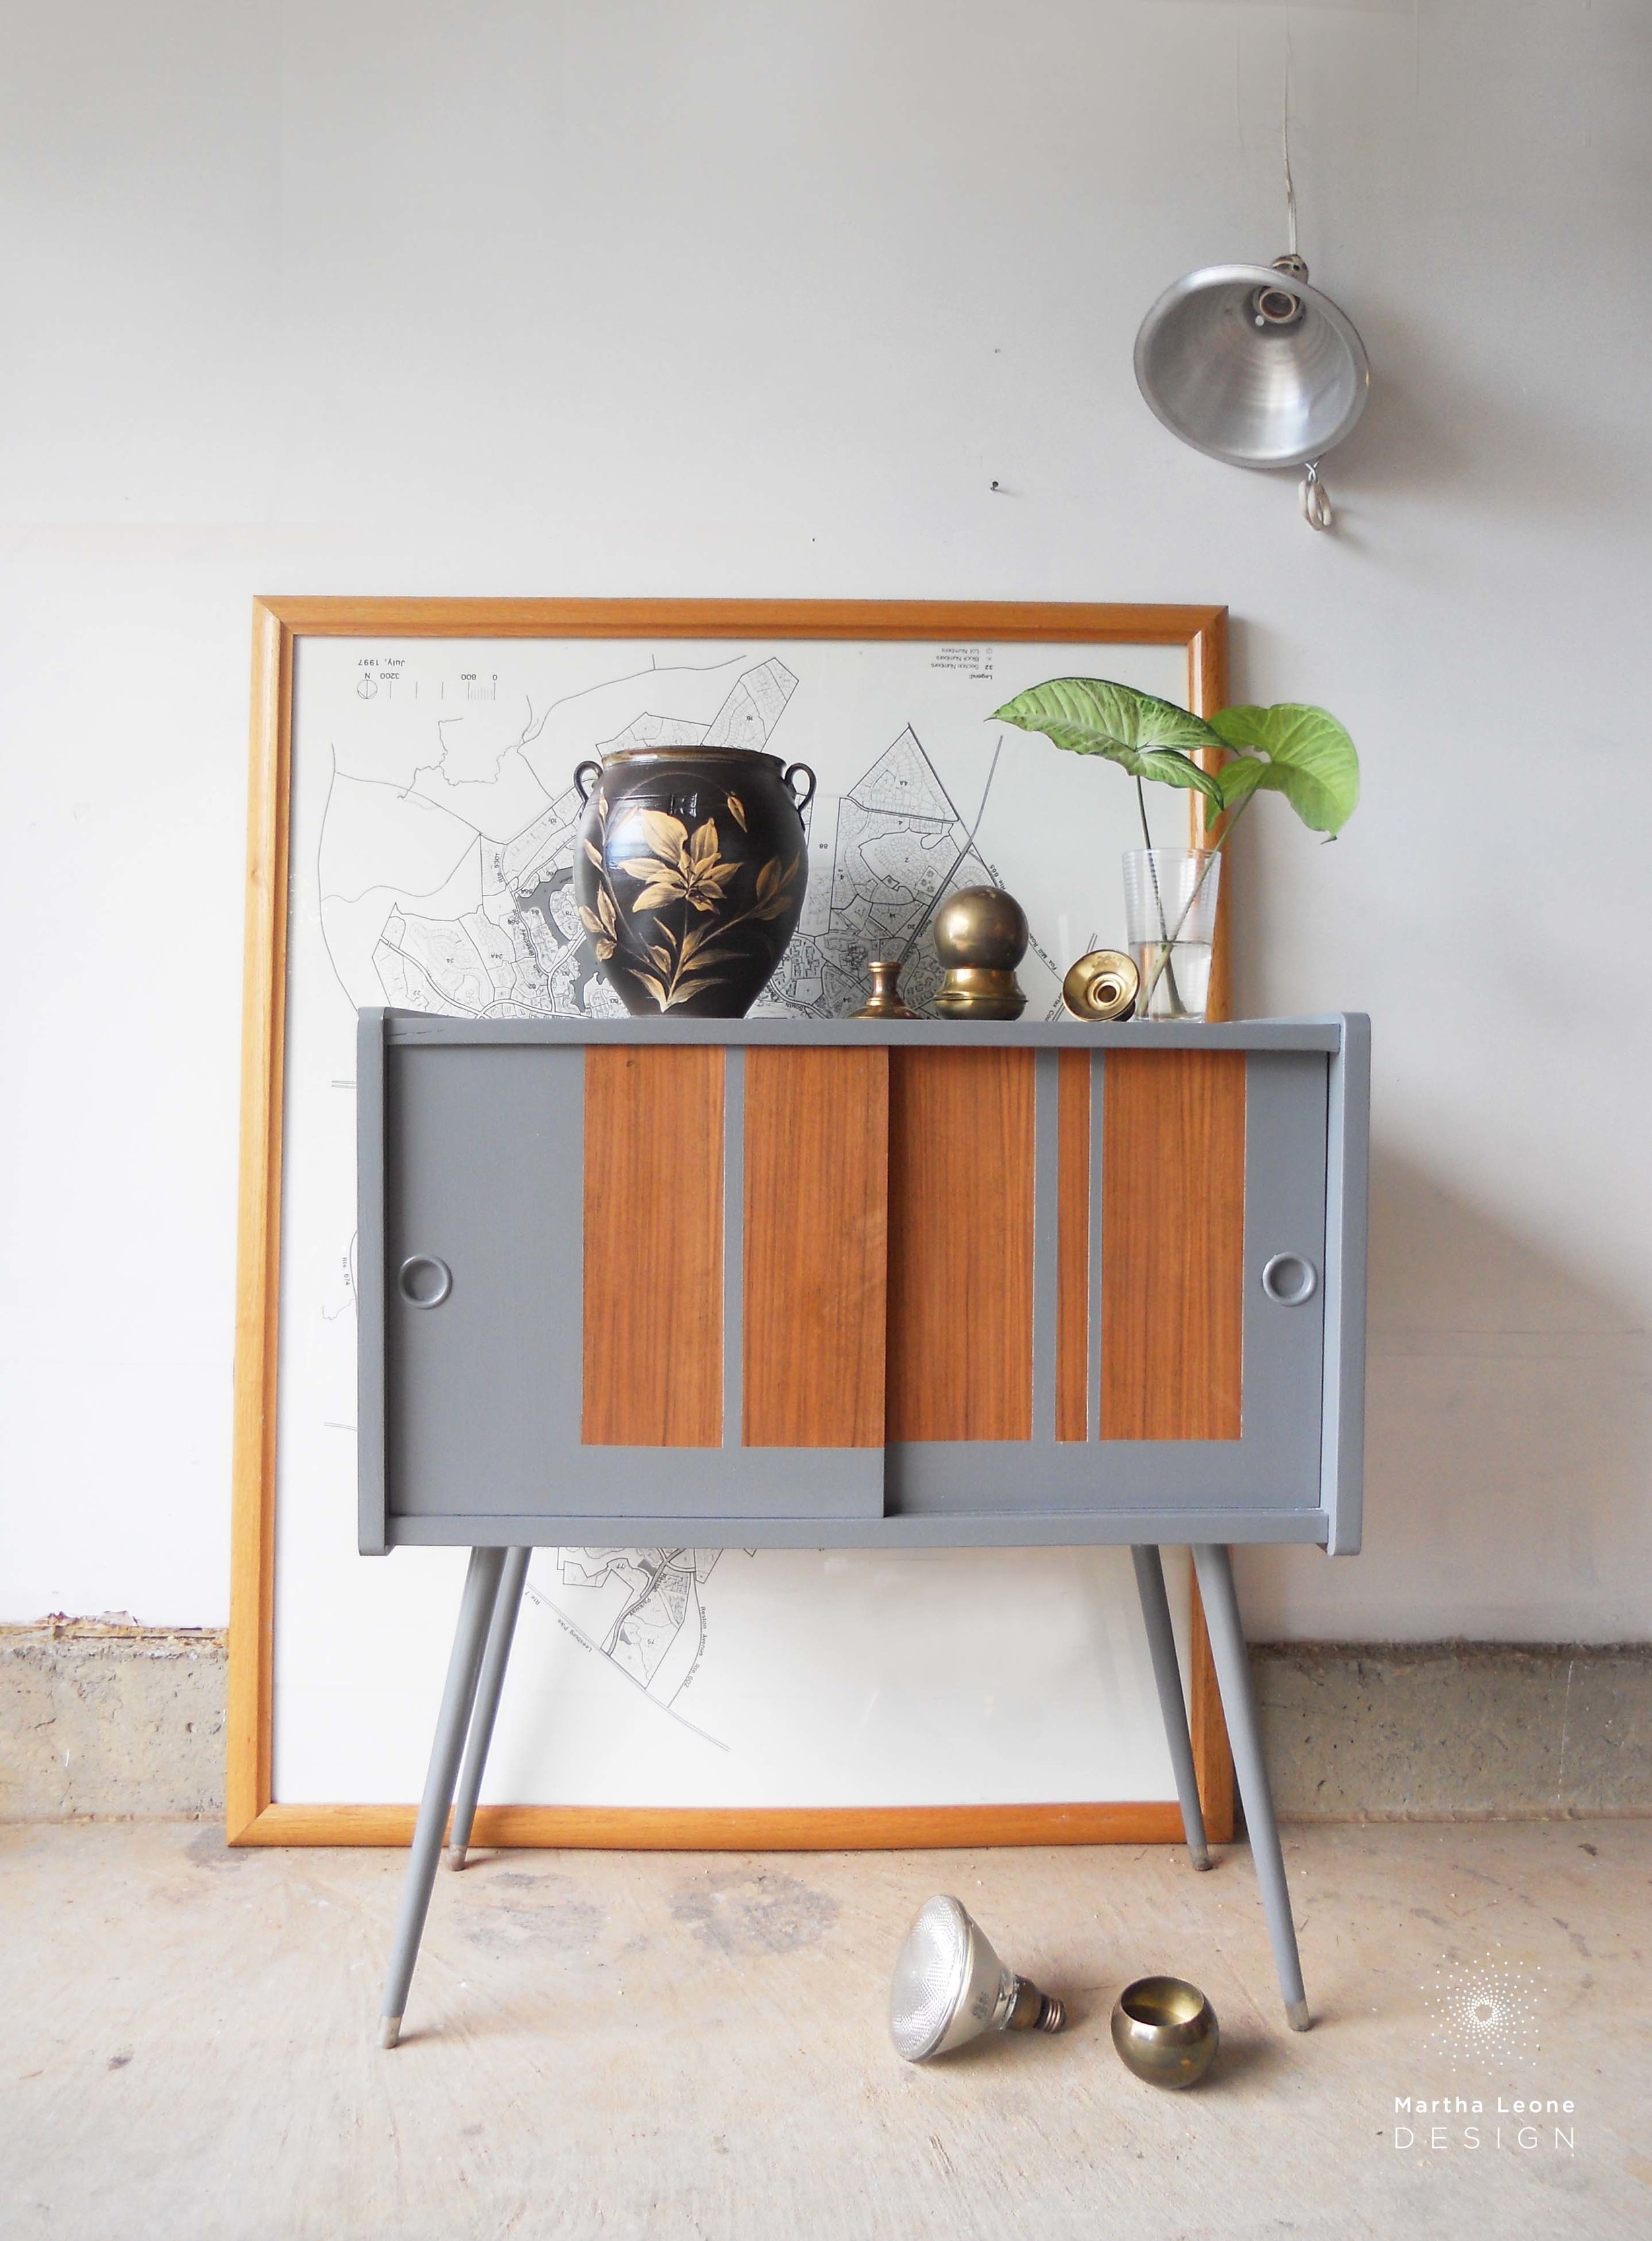 record cabinet by Martha Leone Design.jpg